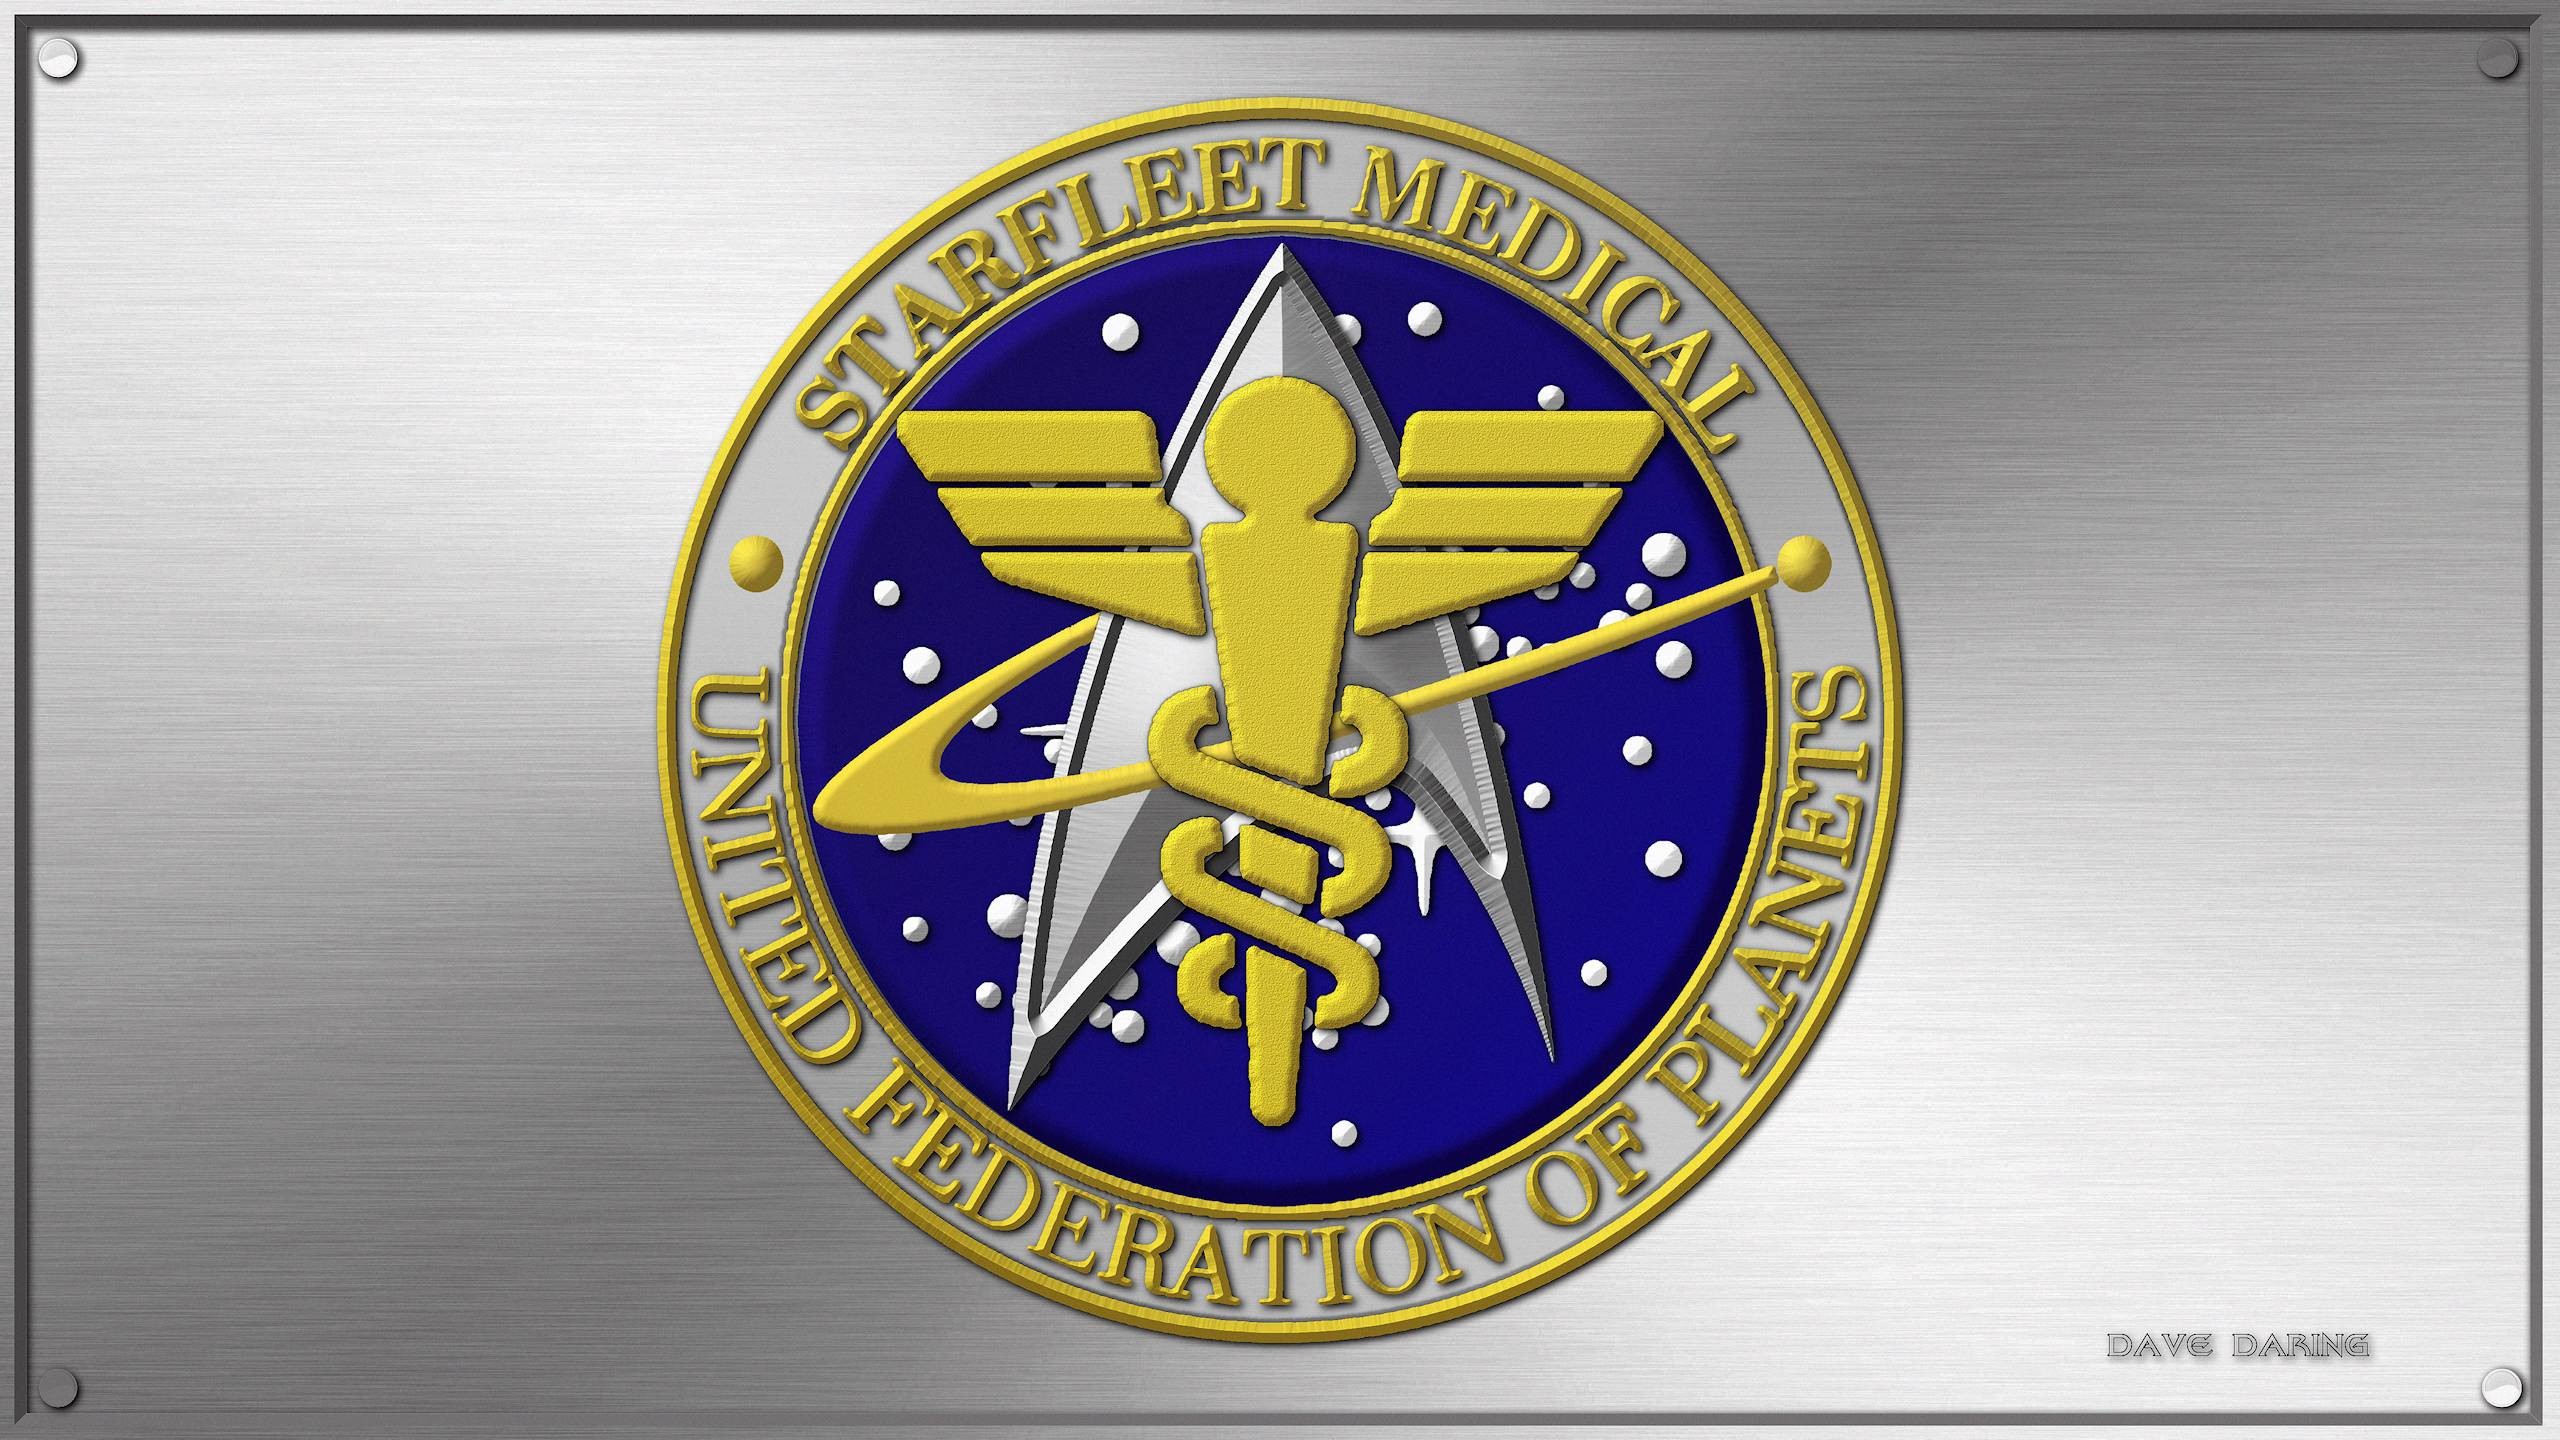 2560x1440 ... Starfleet Medical Seal by Dave-Daring